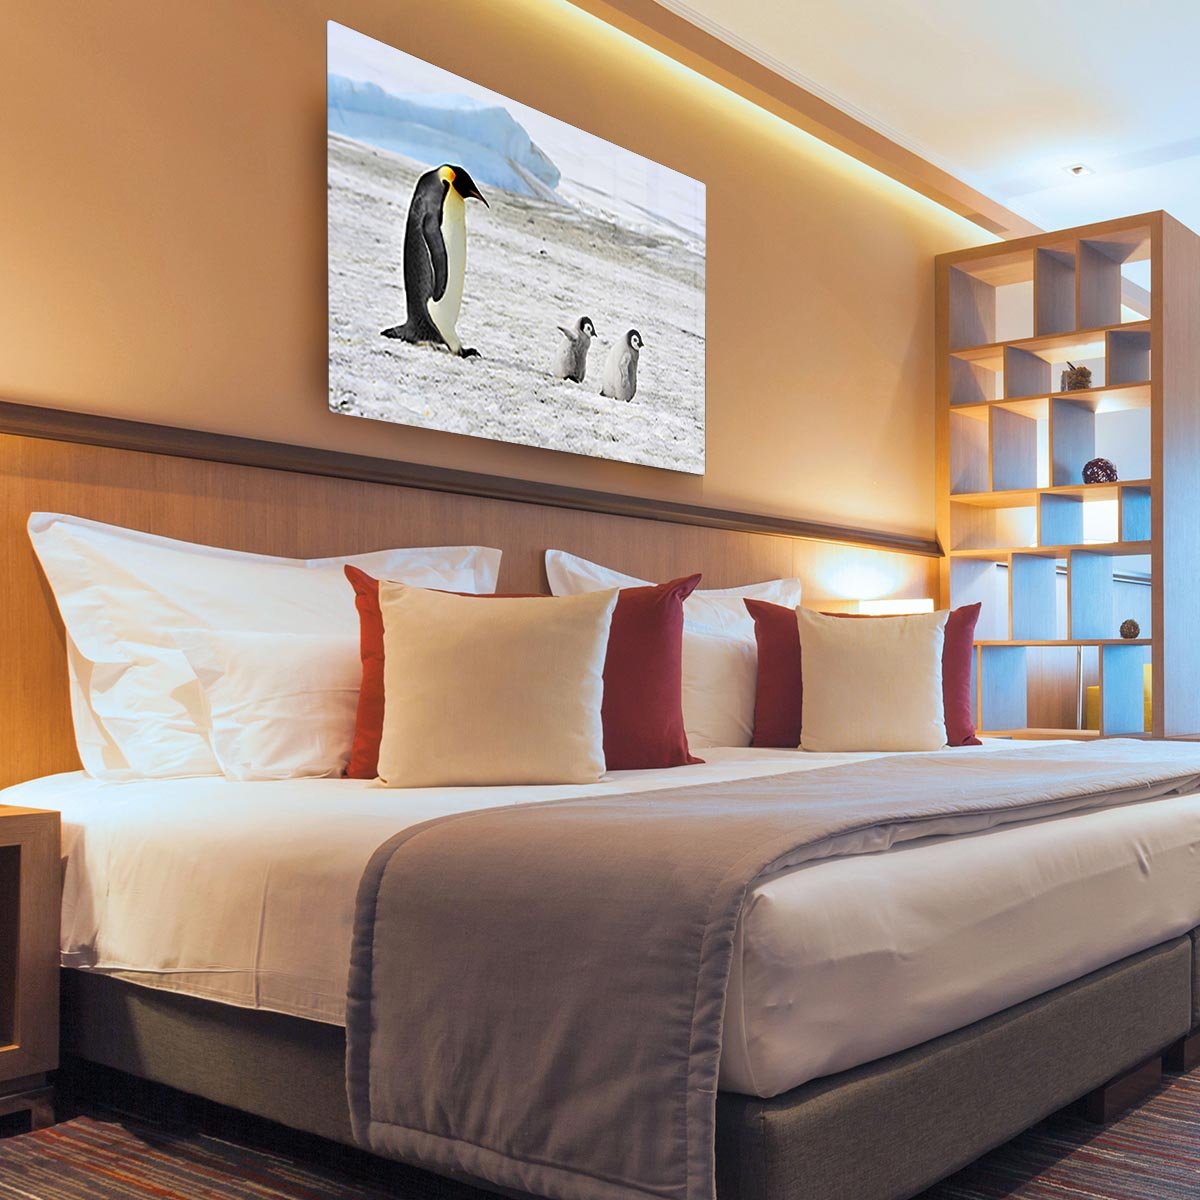 Emperor Penguin with two chicks in Antarctica HD Metal Print - Canvas Art Rocks - 3